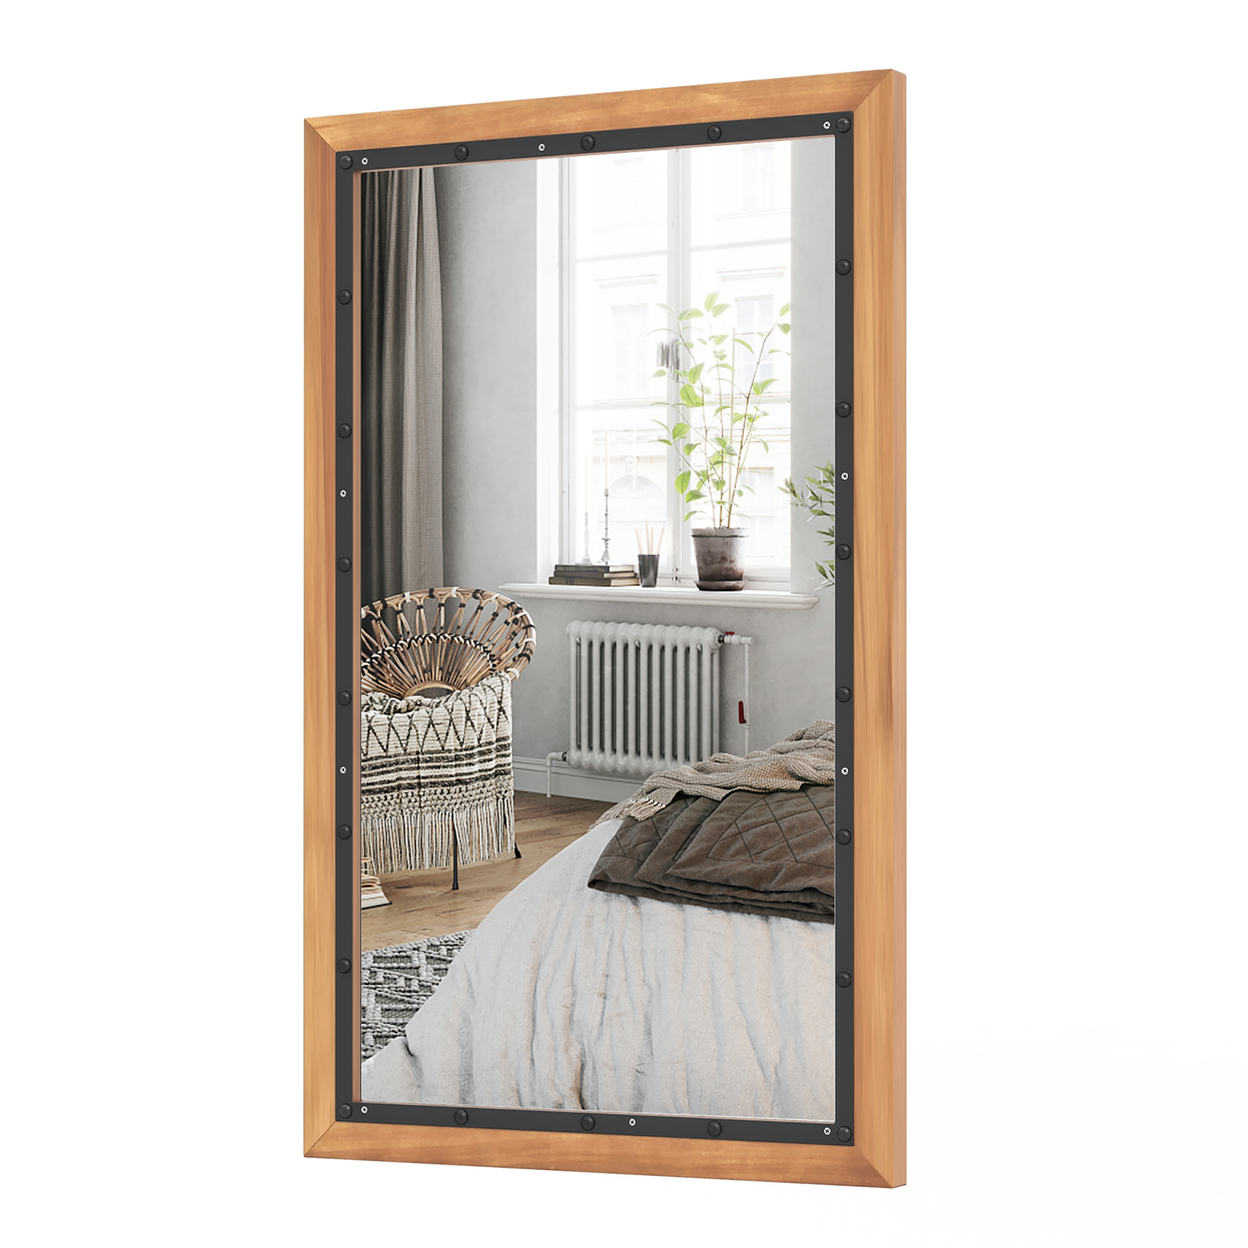 Rustic Wood Mirror Rectangular Frame Decor Wall Mounted Mirror W/ Back Board